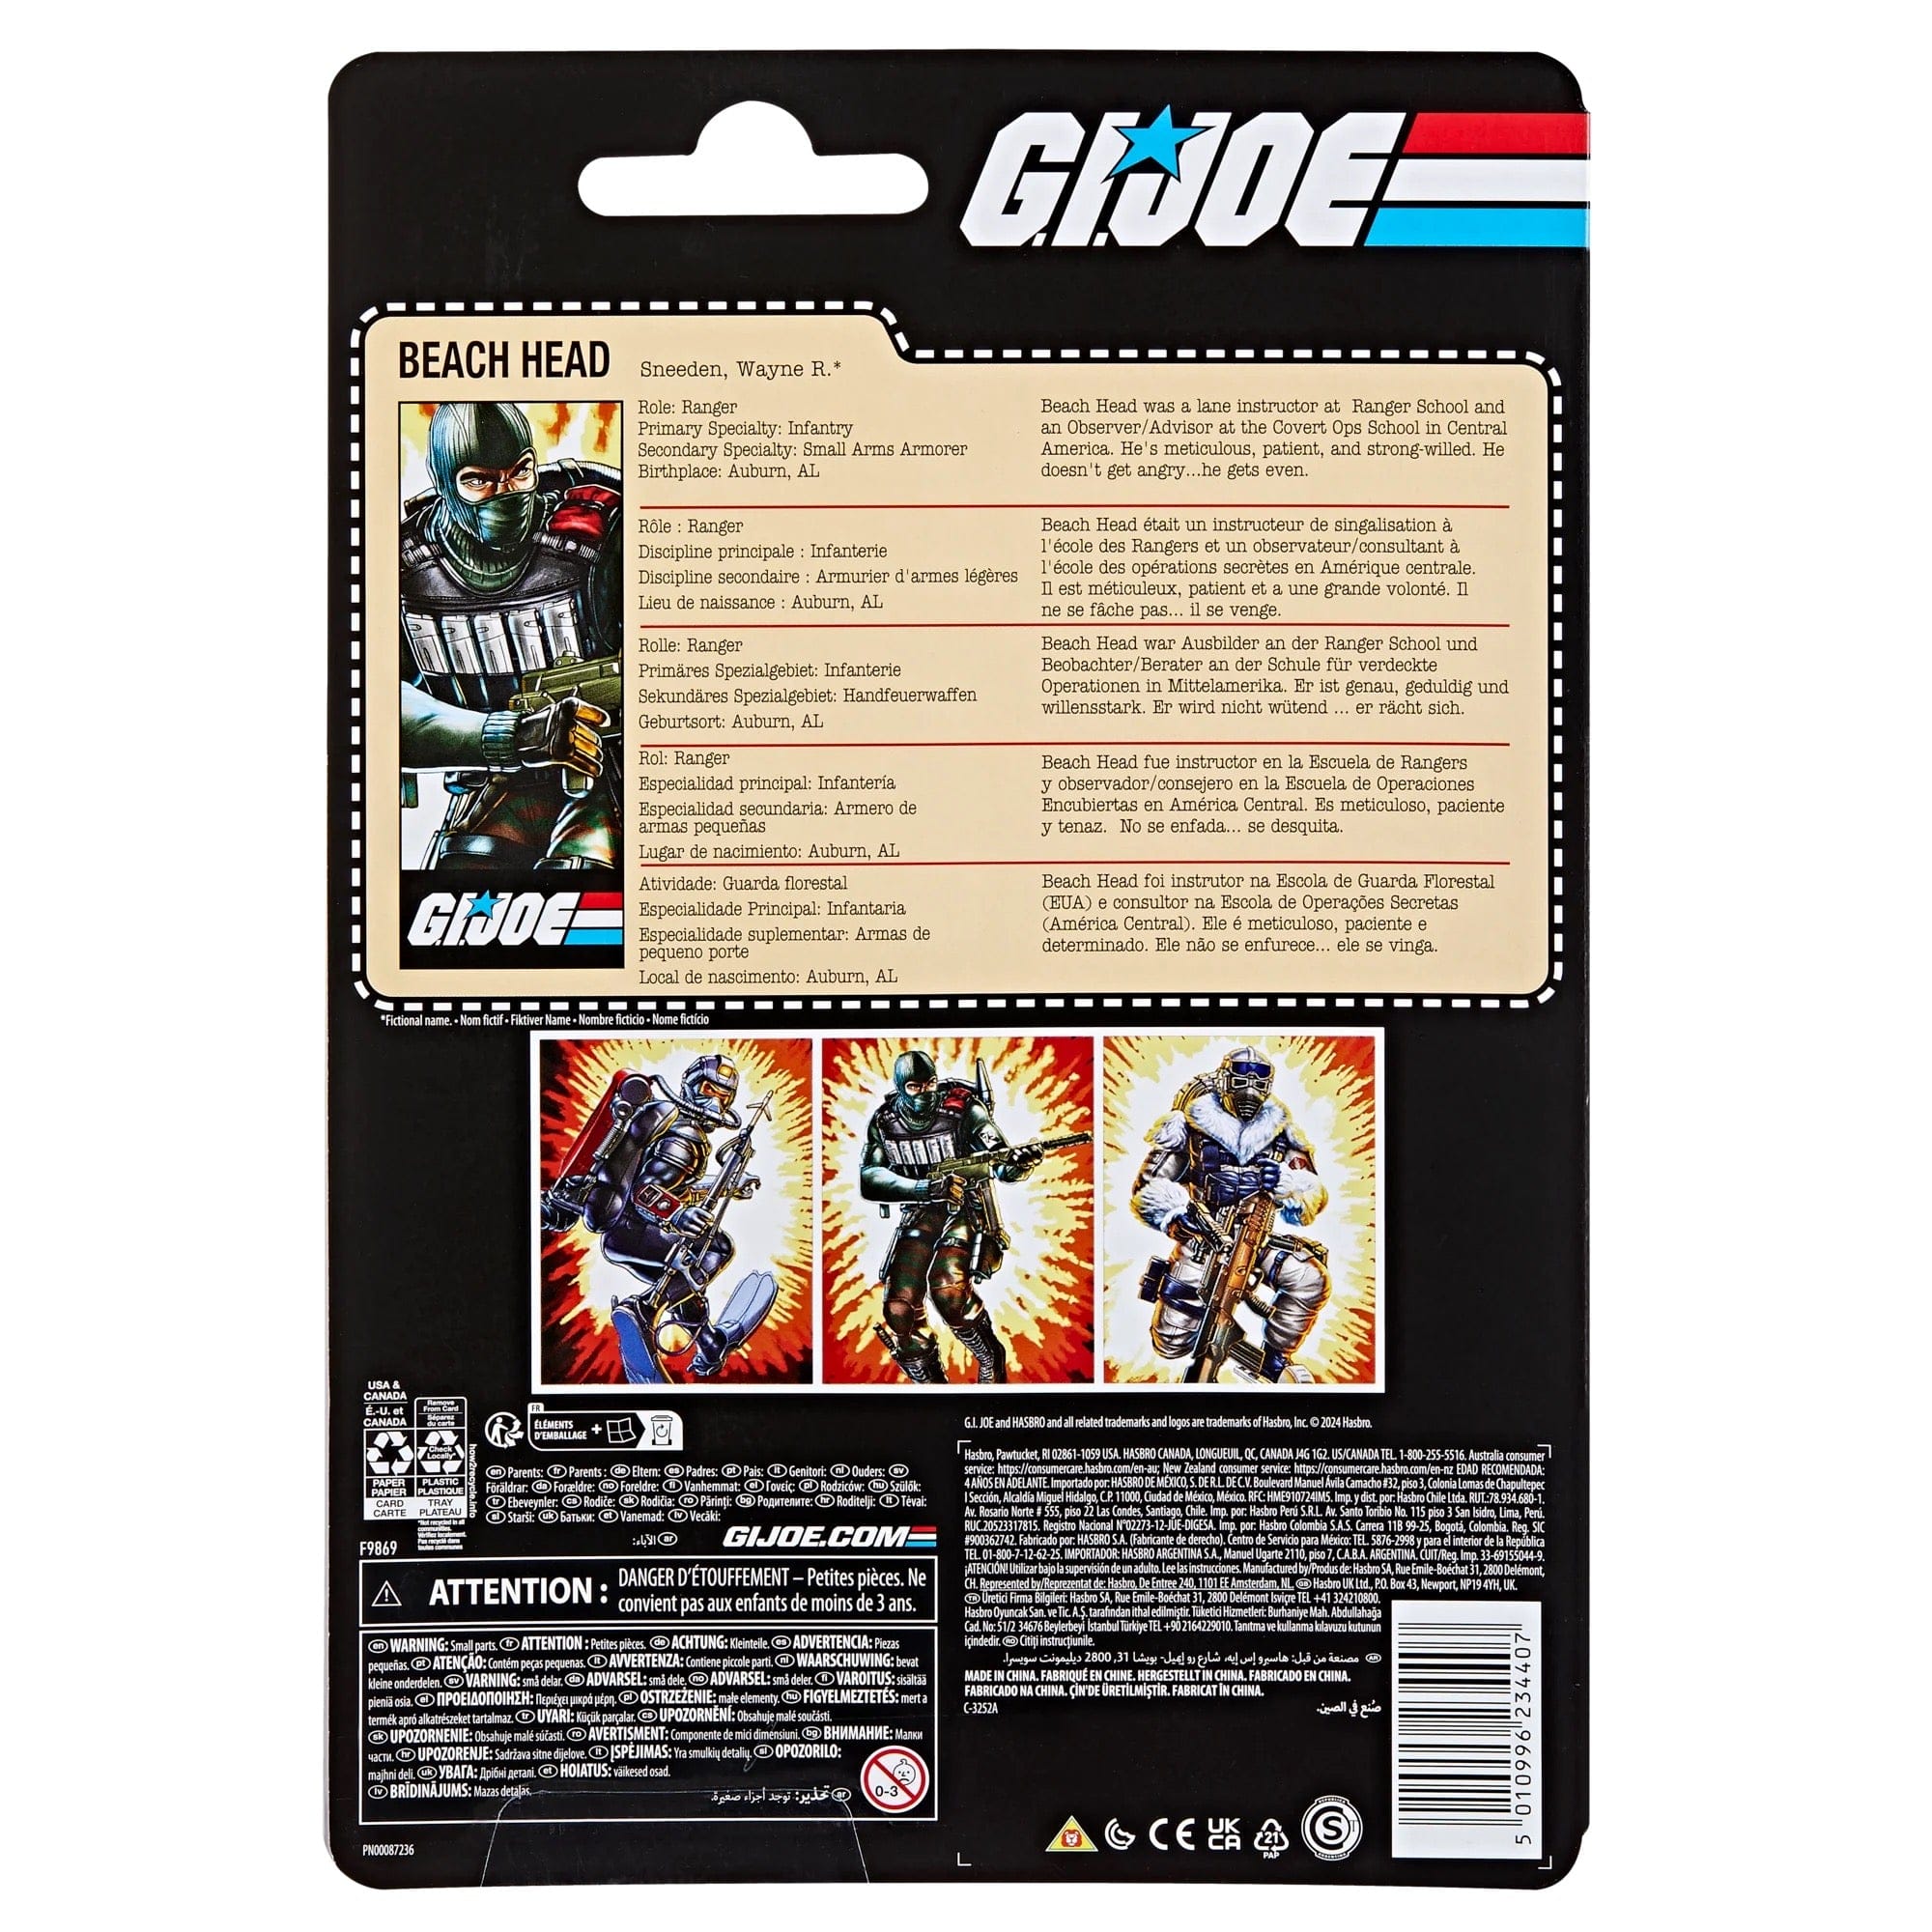 Hasbro G.I. Joe Classified Series Retro Cardback Beach Head Action Figure